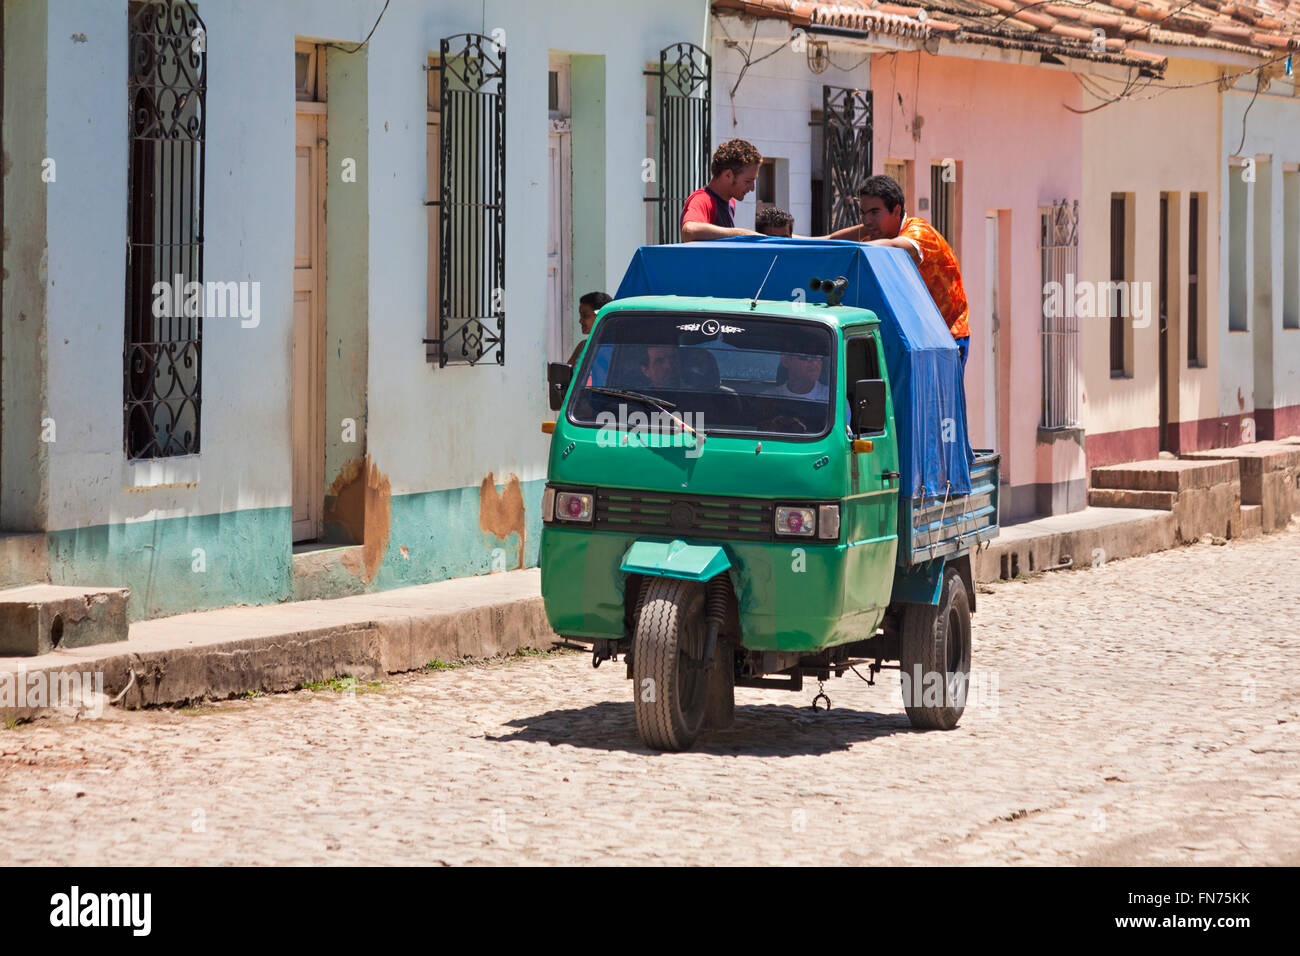 daily life in Cuba - Piaggio Ape three wheeled vehicle driving along cobbled street at Trinidad, Cuba Stock Photo